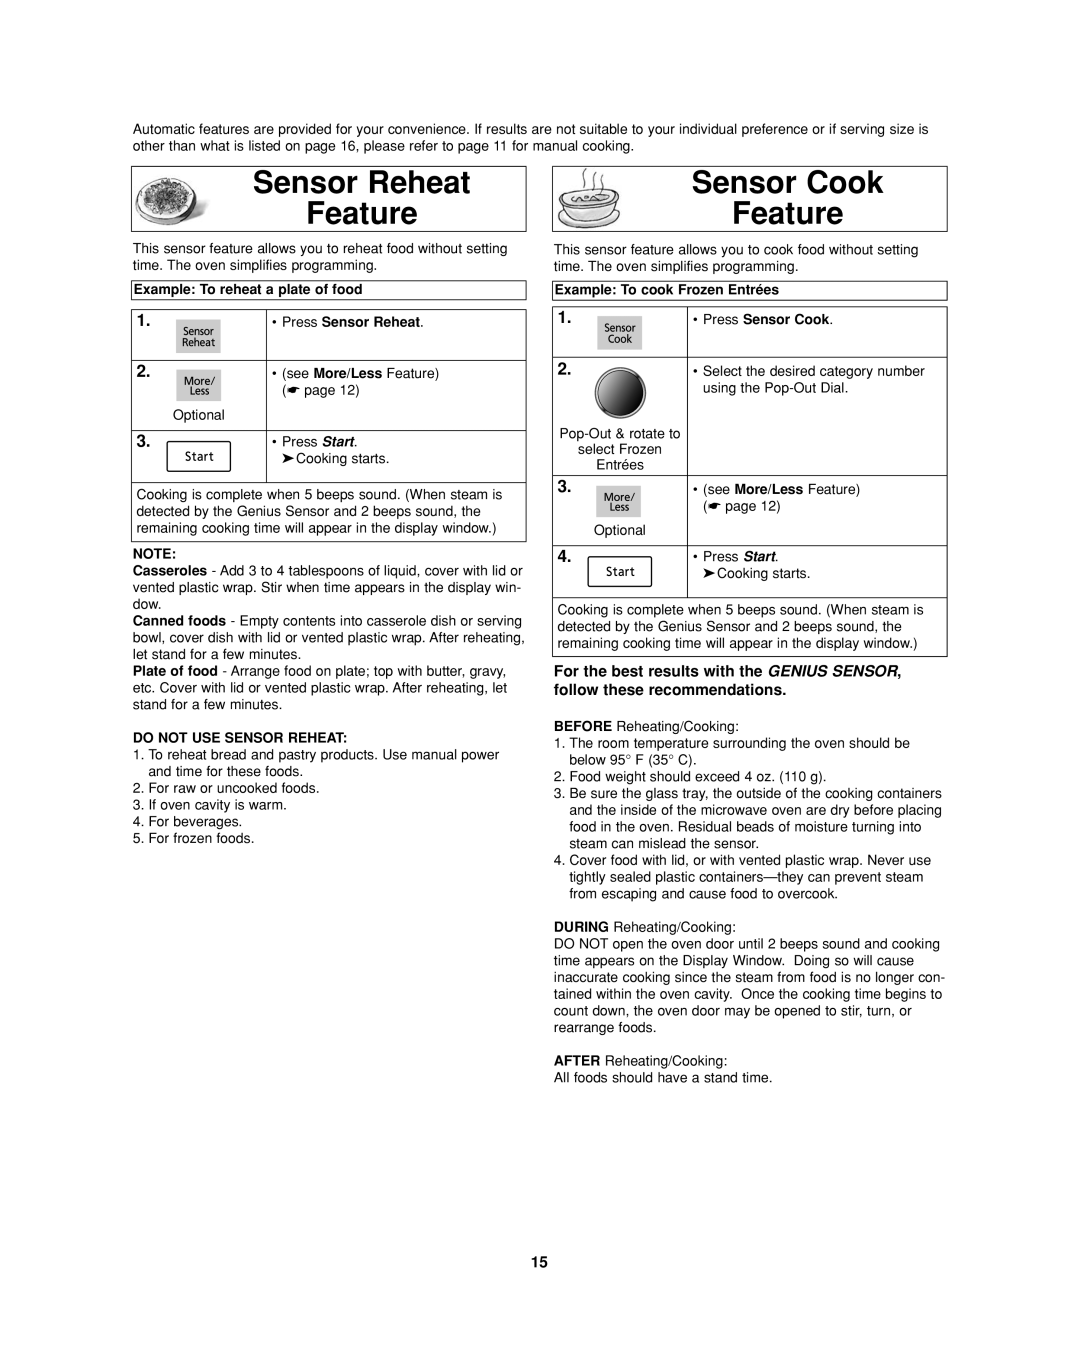 Panasonic NN-SD277 Sensor Reheat Feature, Sensor Cook Feature, Example To reheat a plate of food, Press Sensor Reheat 